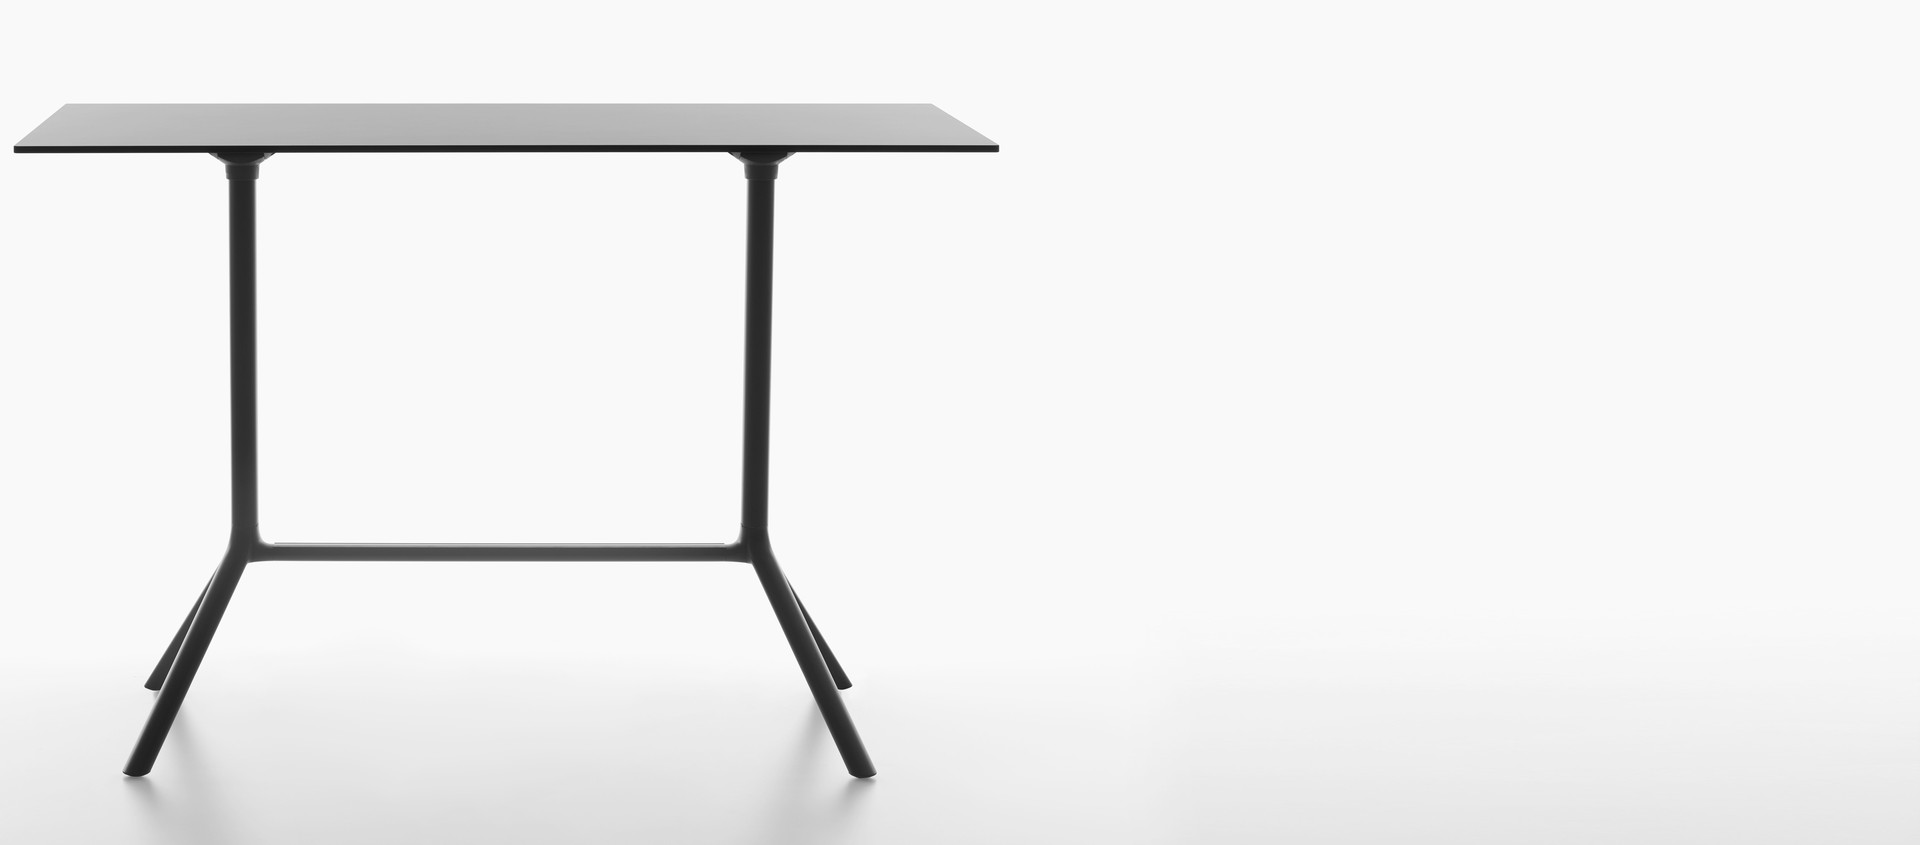 HERO - MIURA table rectangular table top, 108 cm high